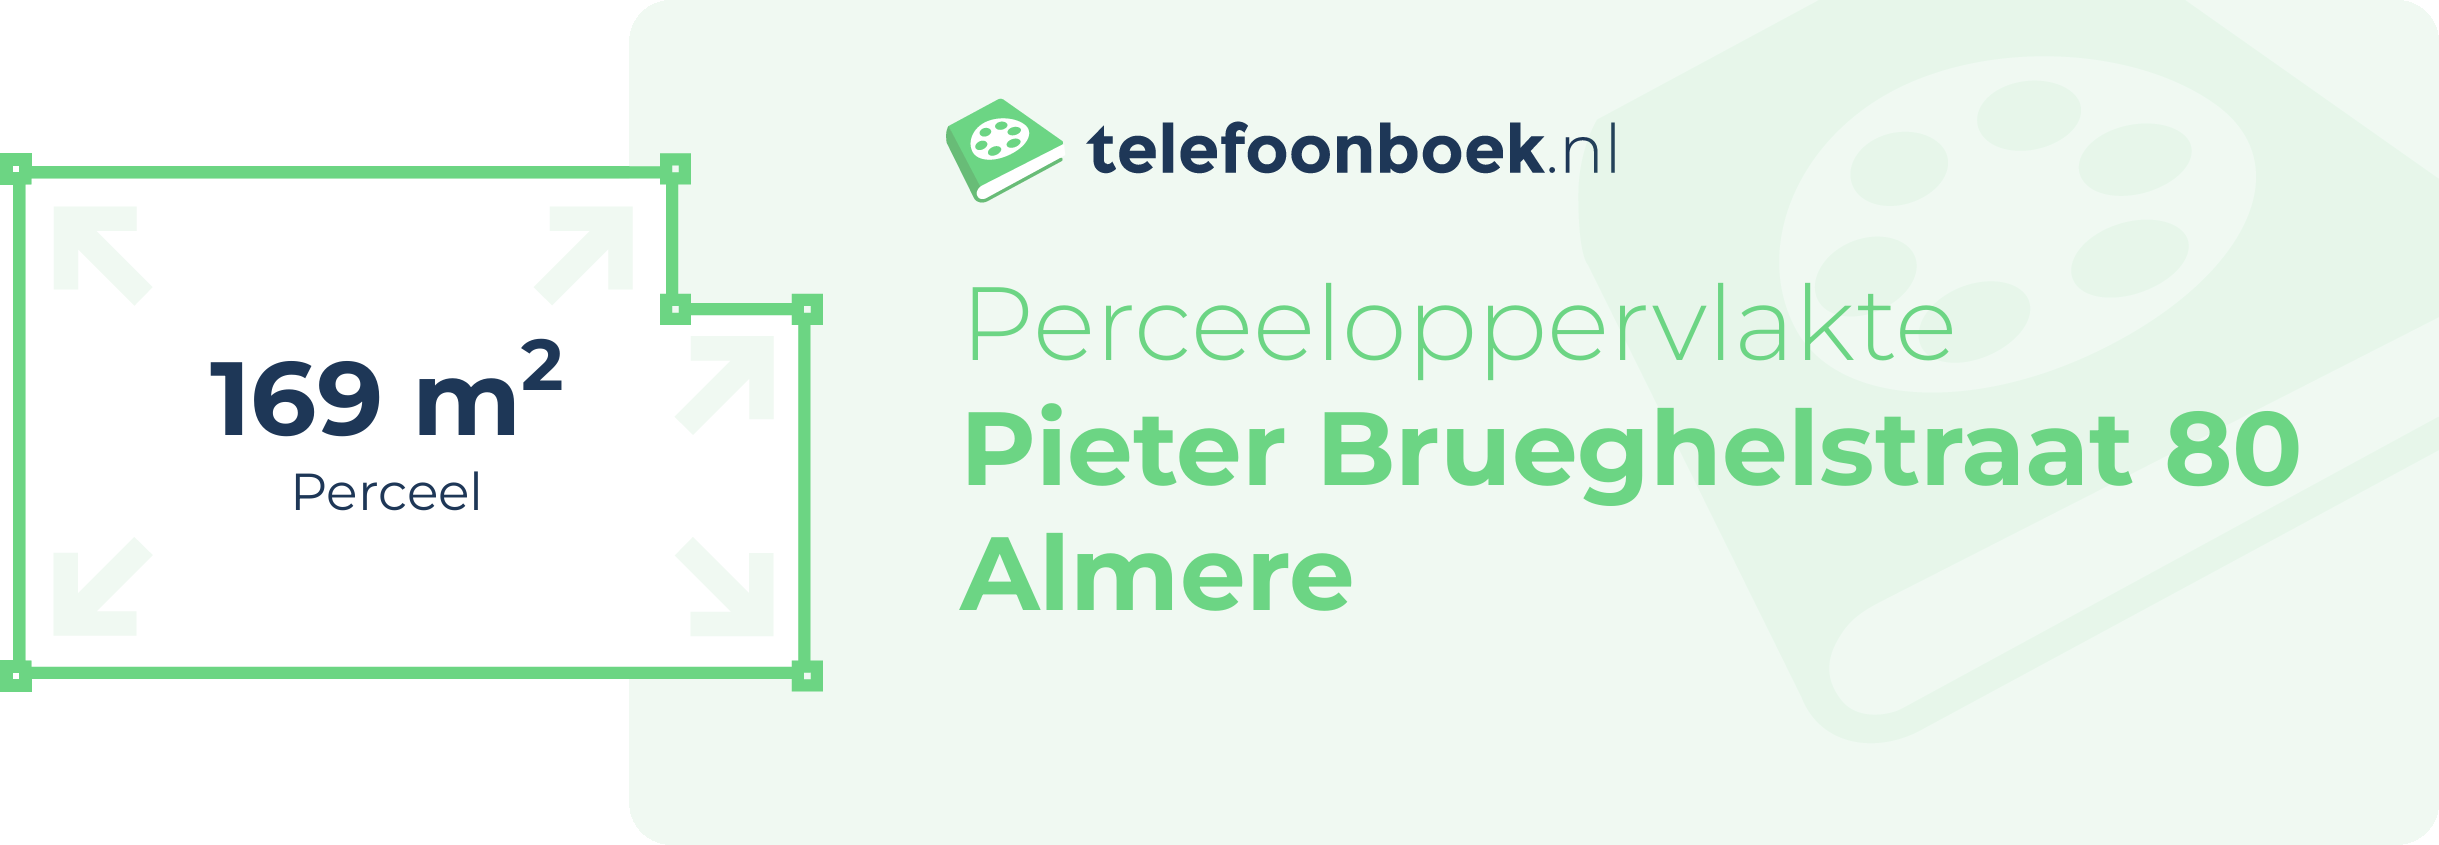 Perceeloppervlakte Pieter Brueghelstraat 80 Almere